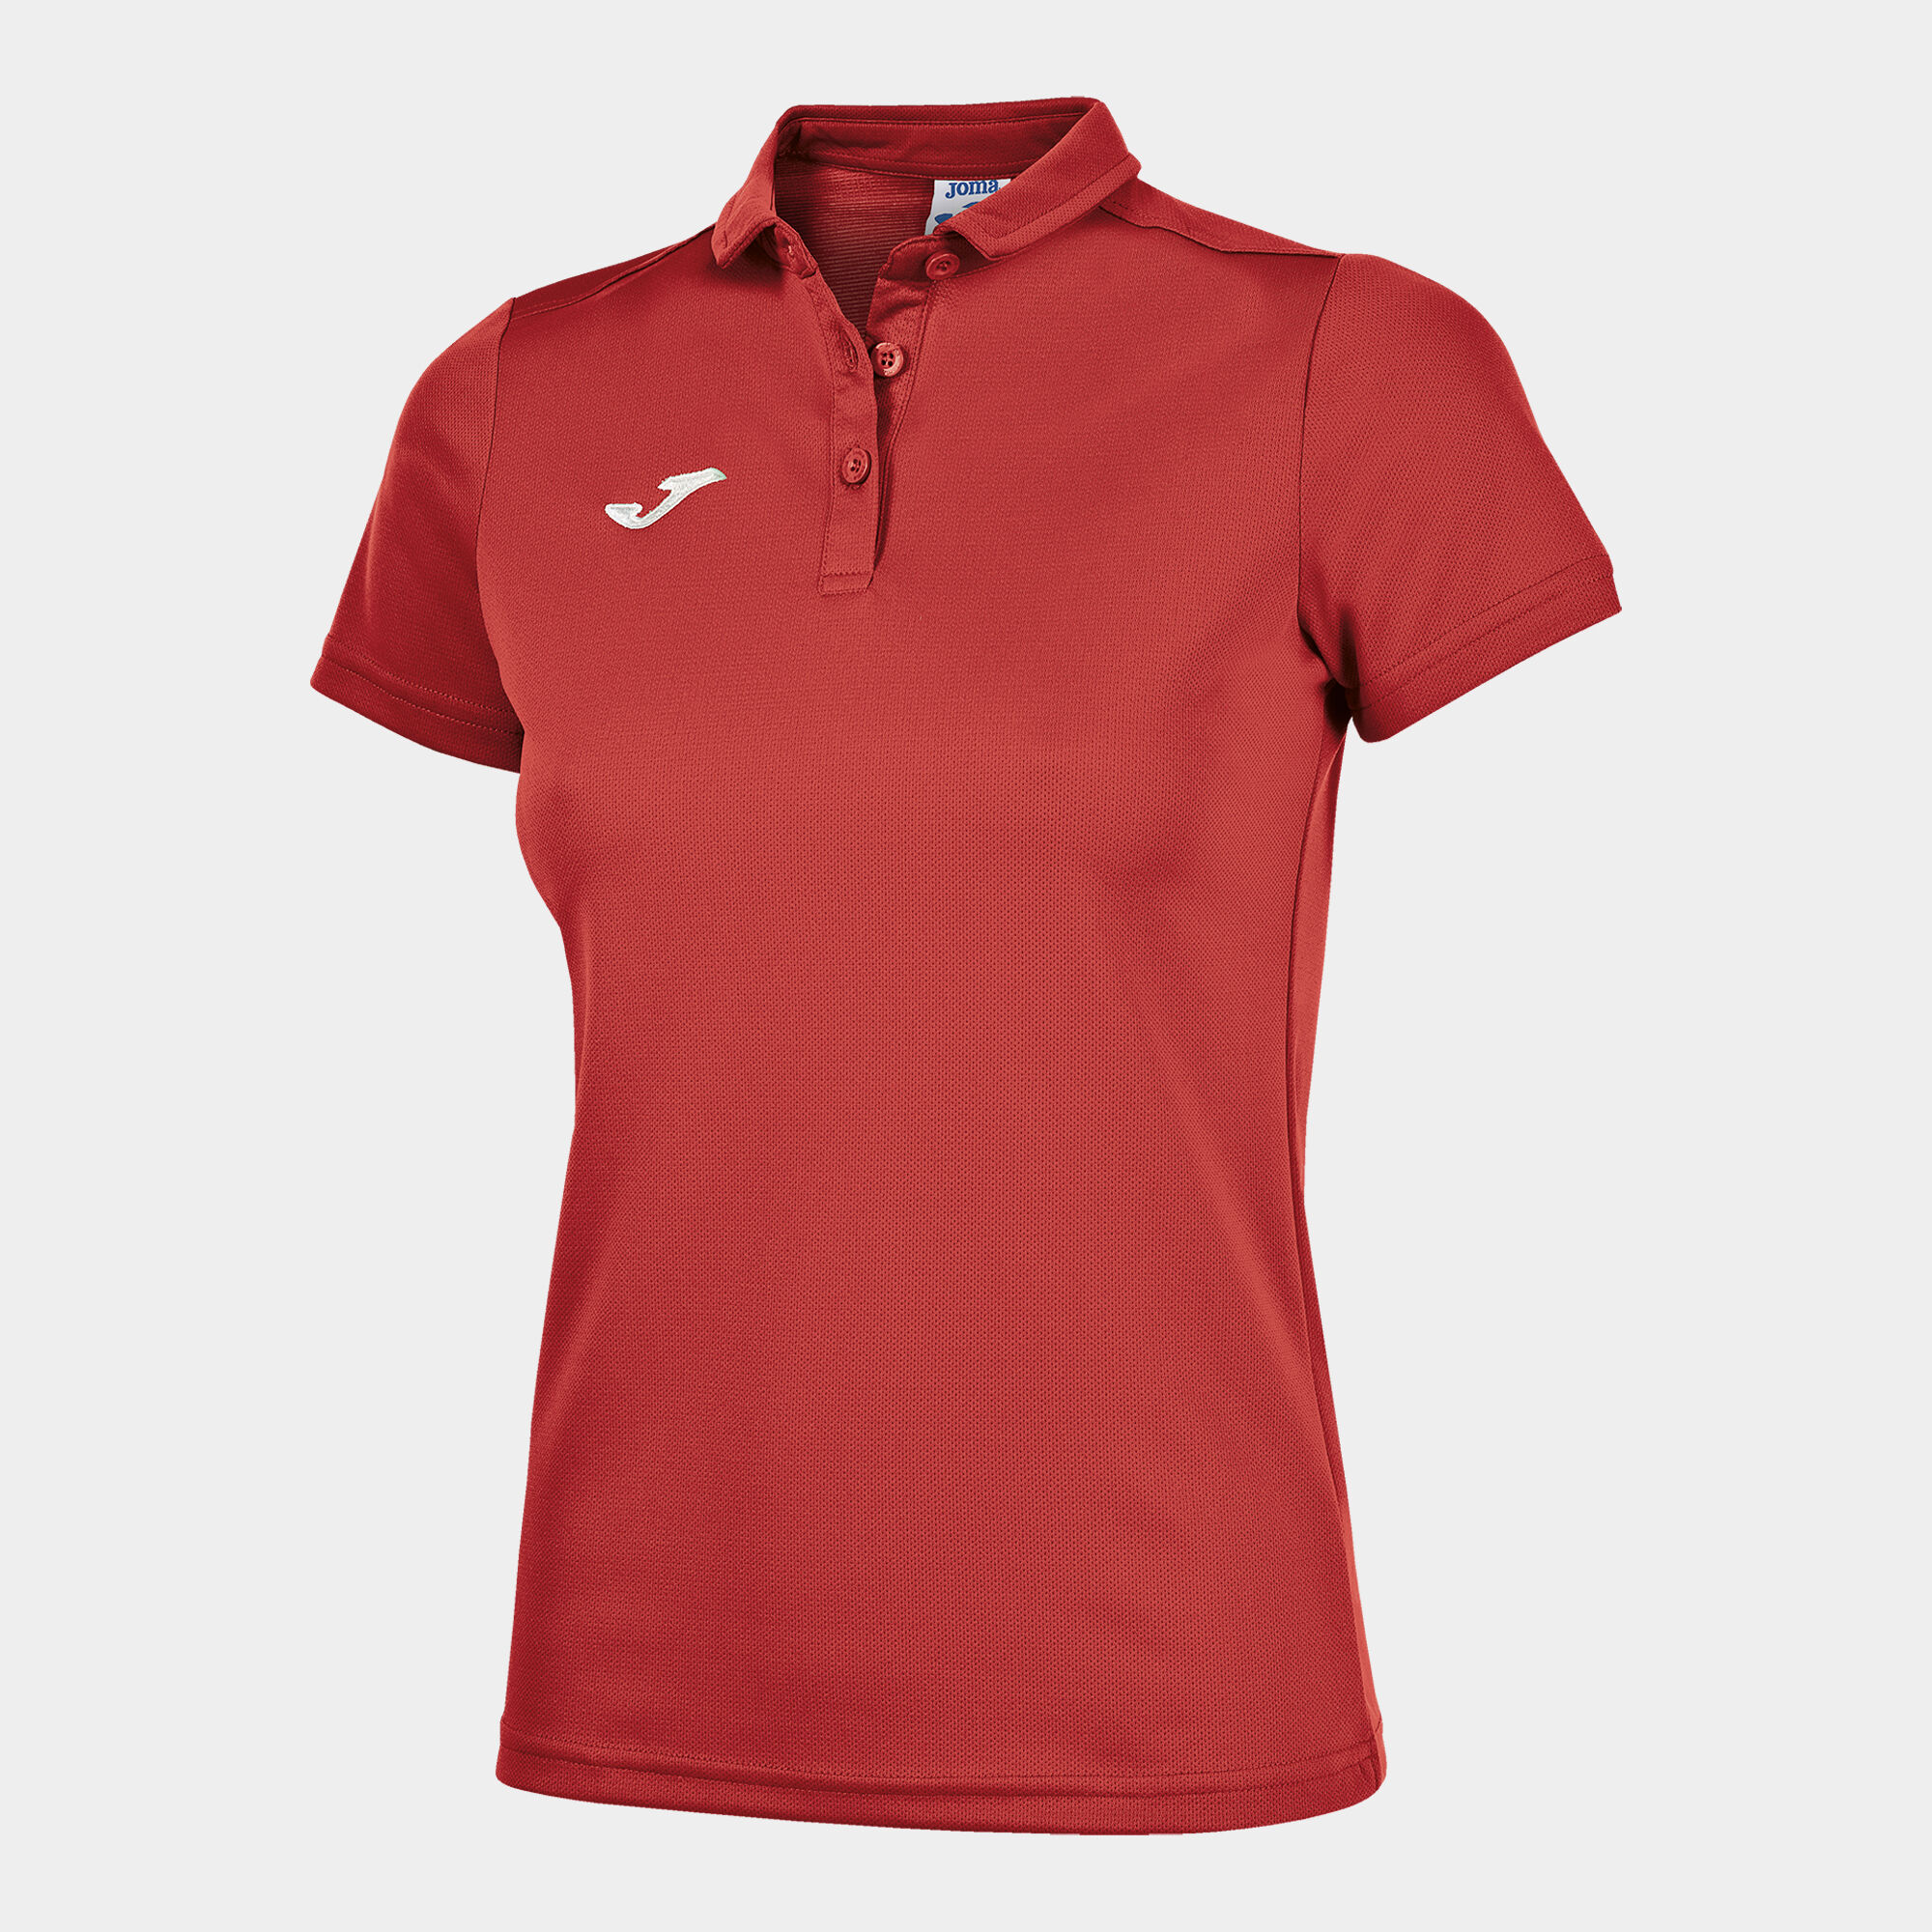 Polo shirt short-sleeve woman Hobby red